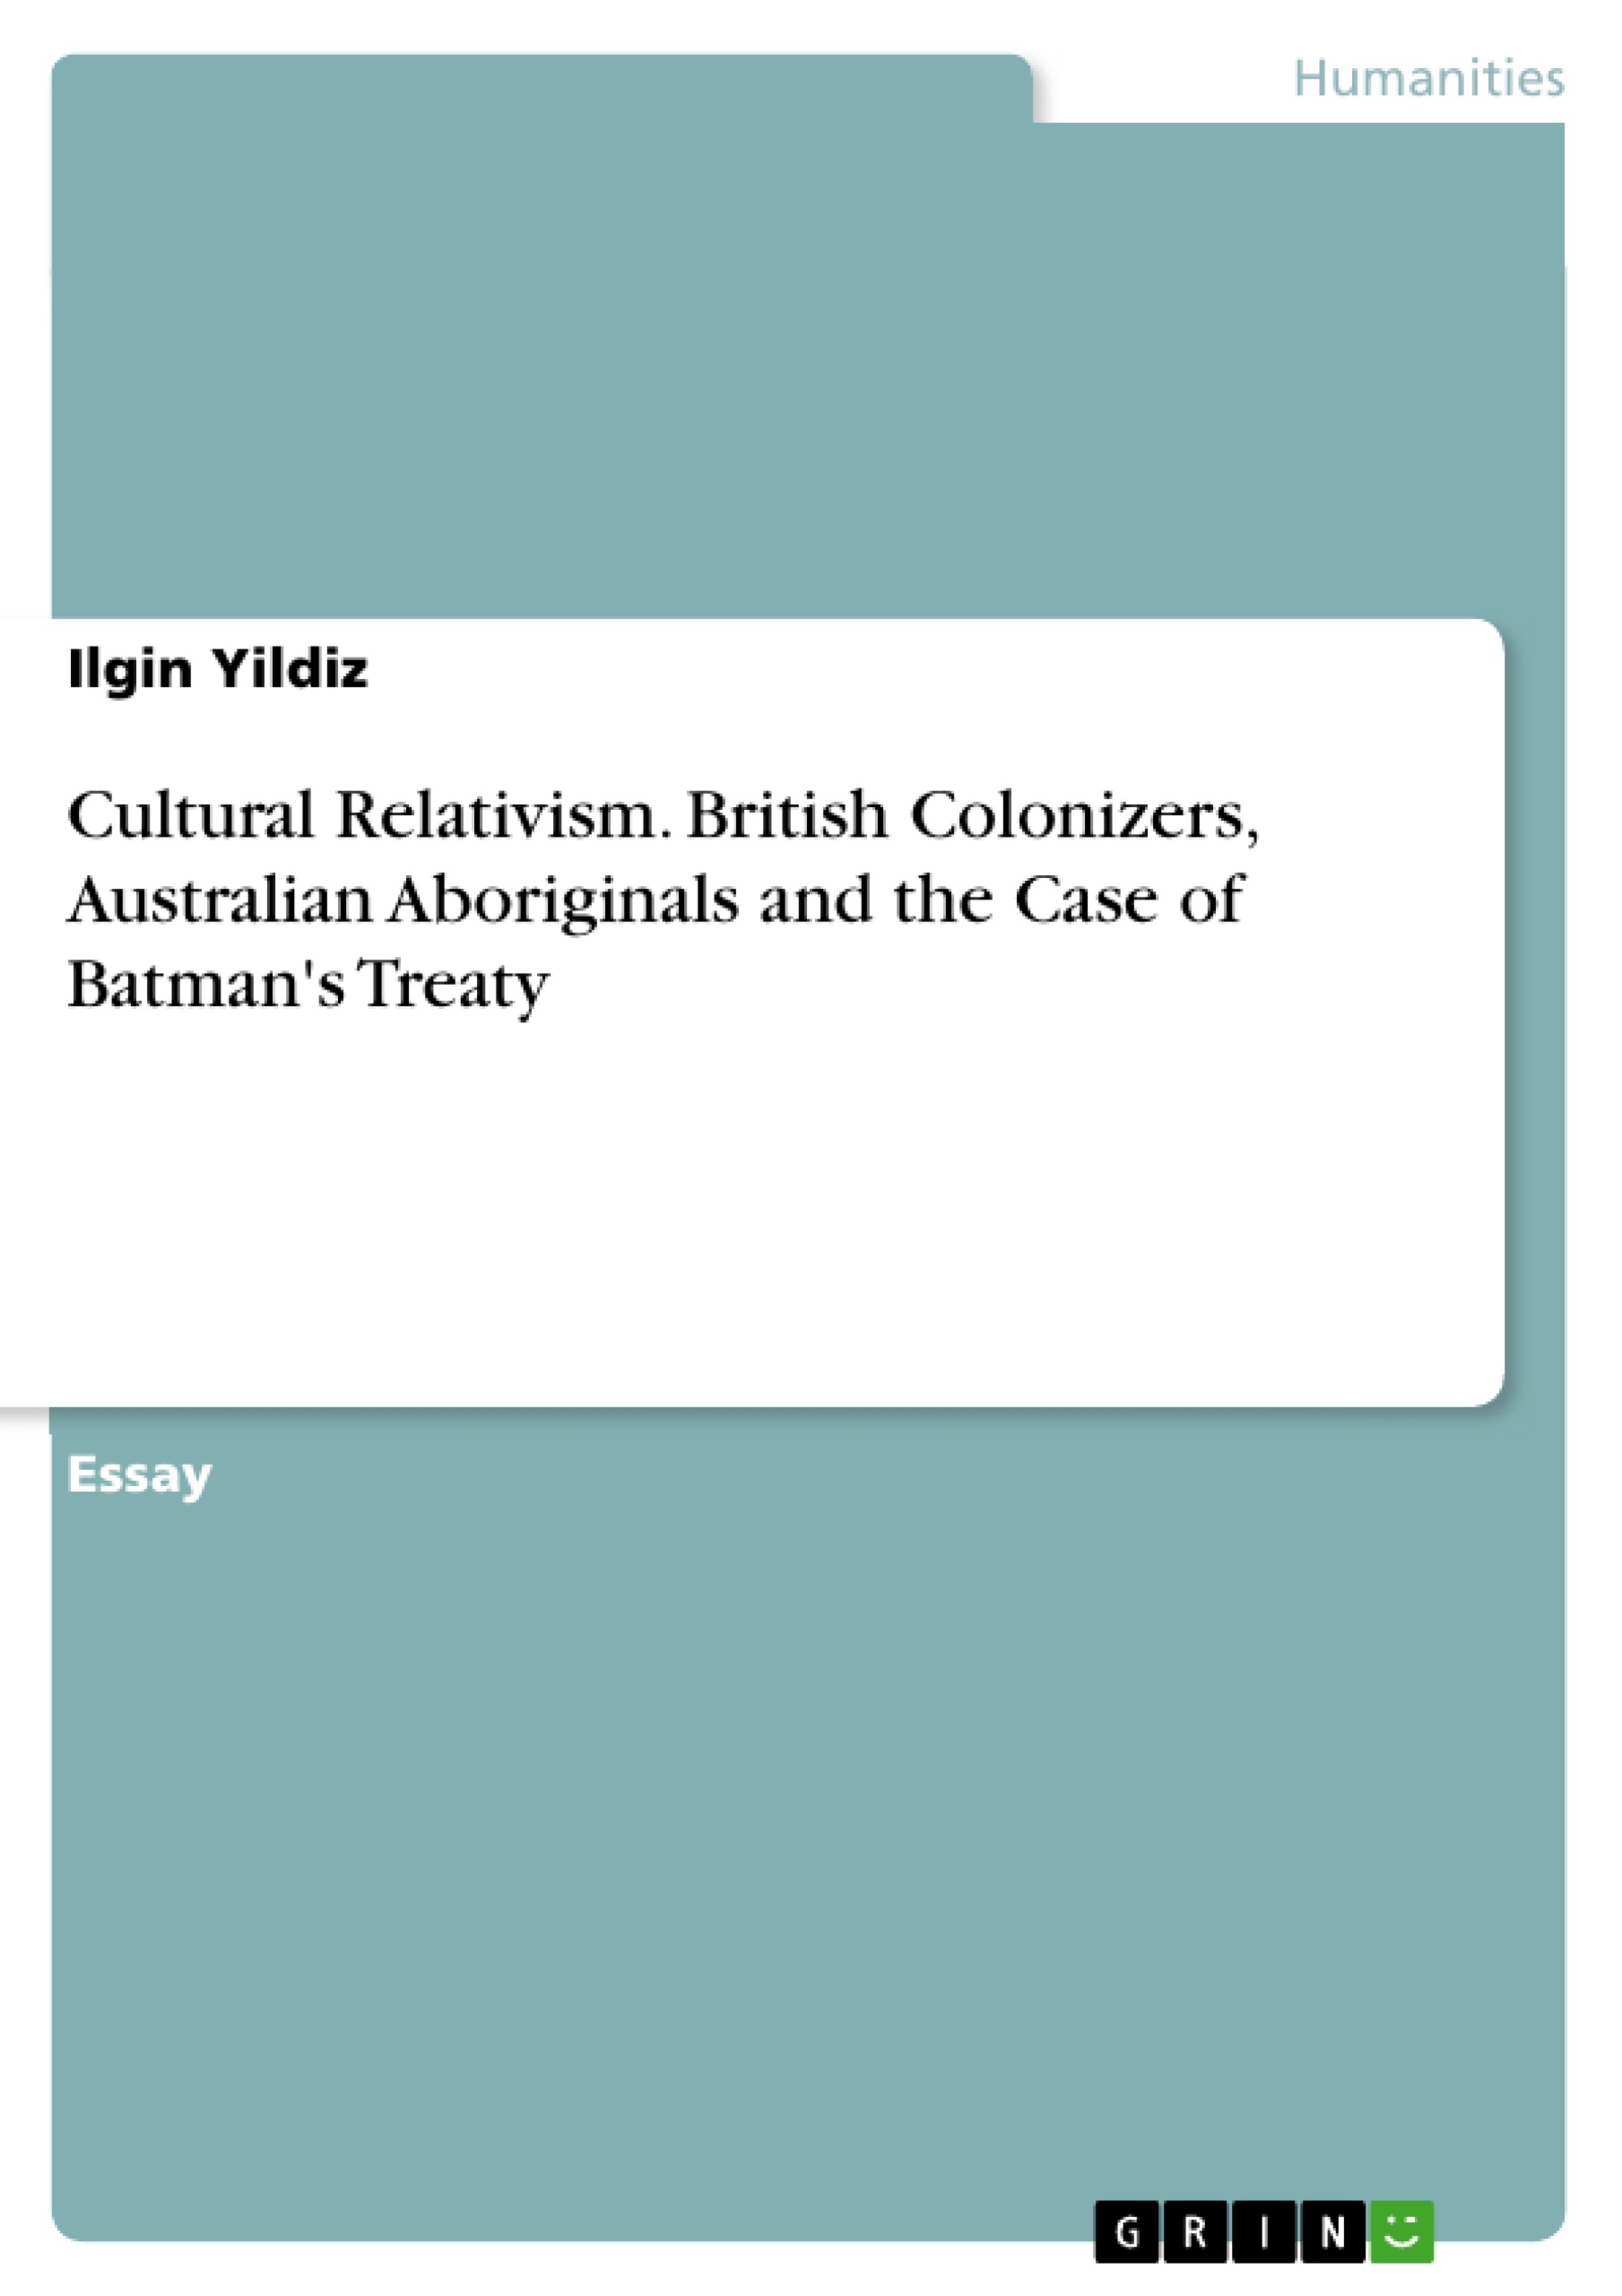 Title: Cultural Relativism. British Colonizers, Australian Aboriginals and the Case of Batman's Treaty